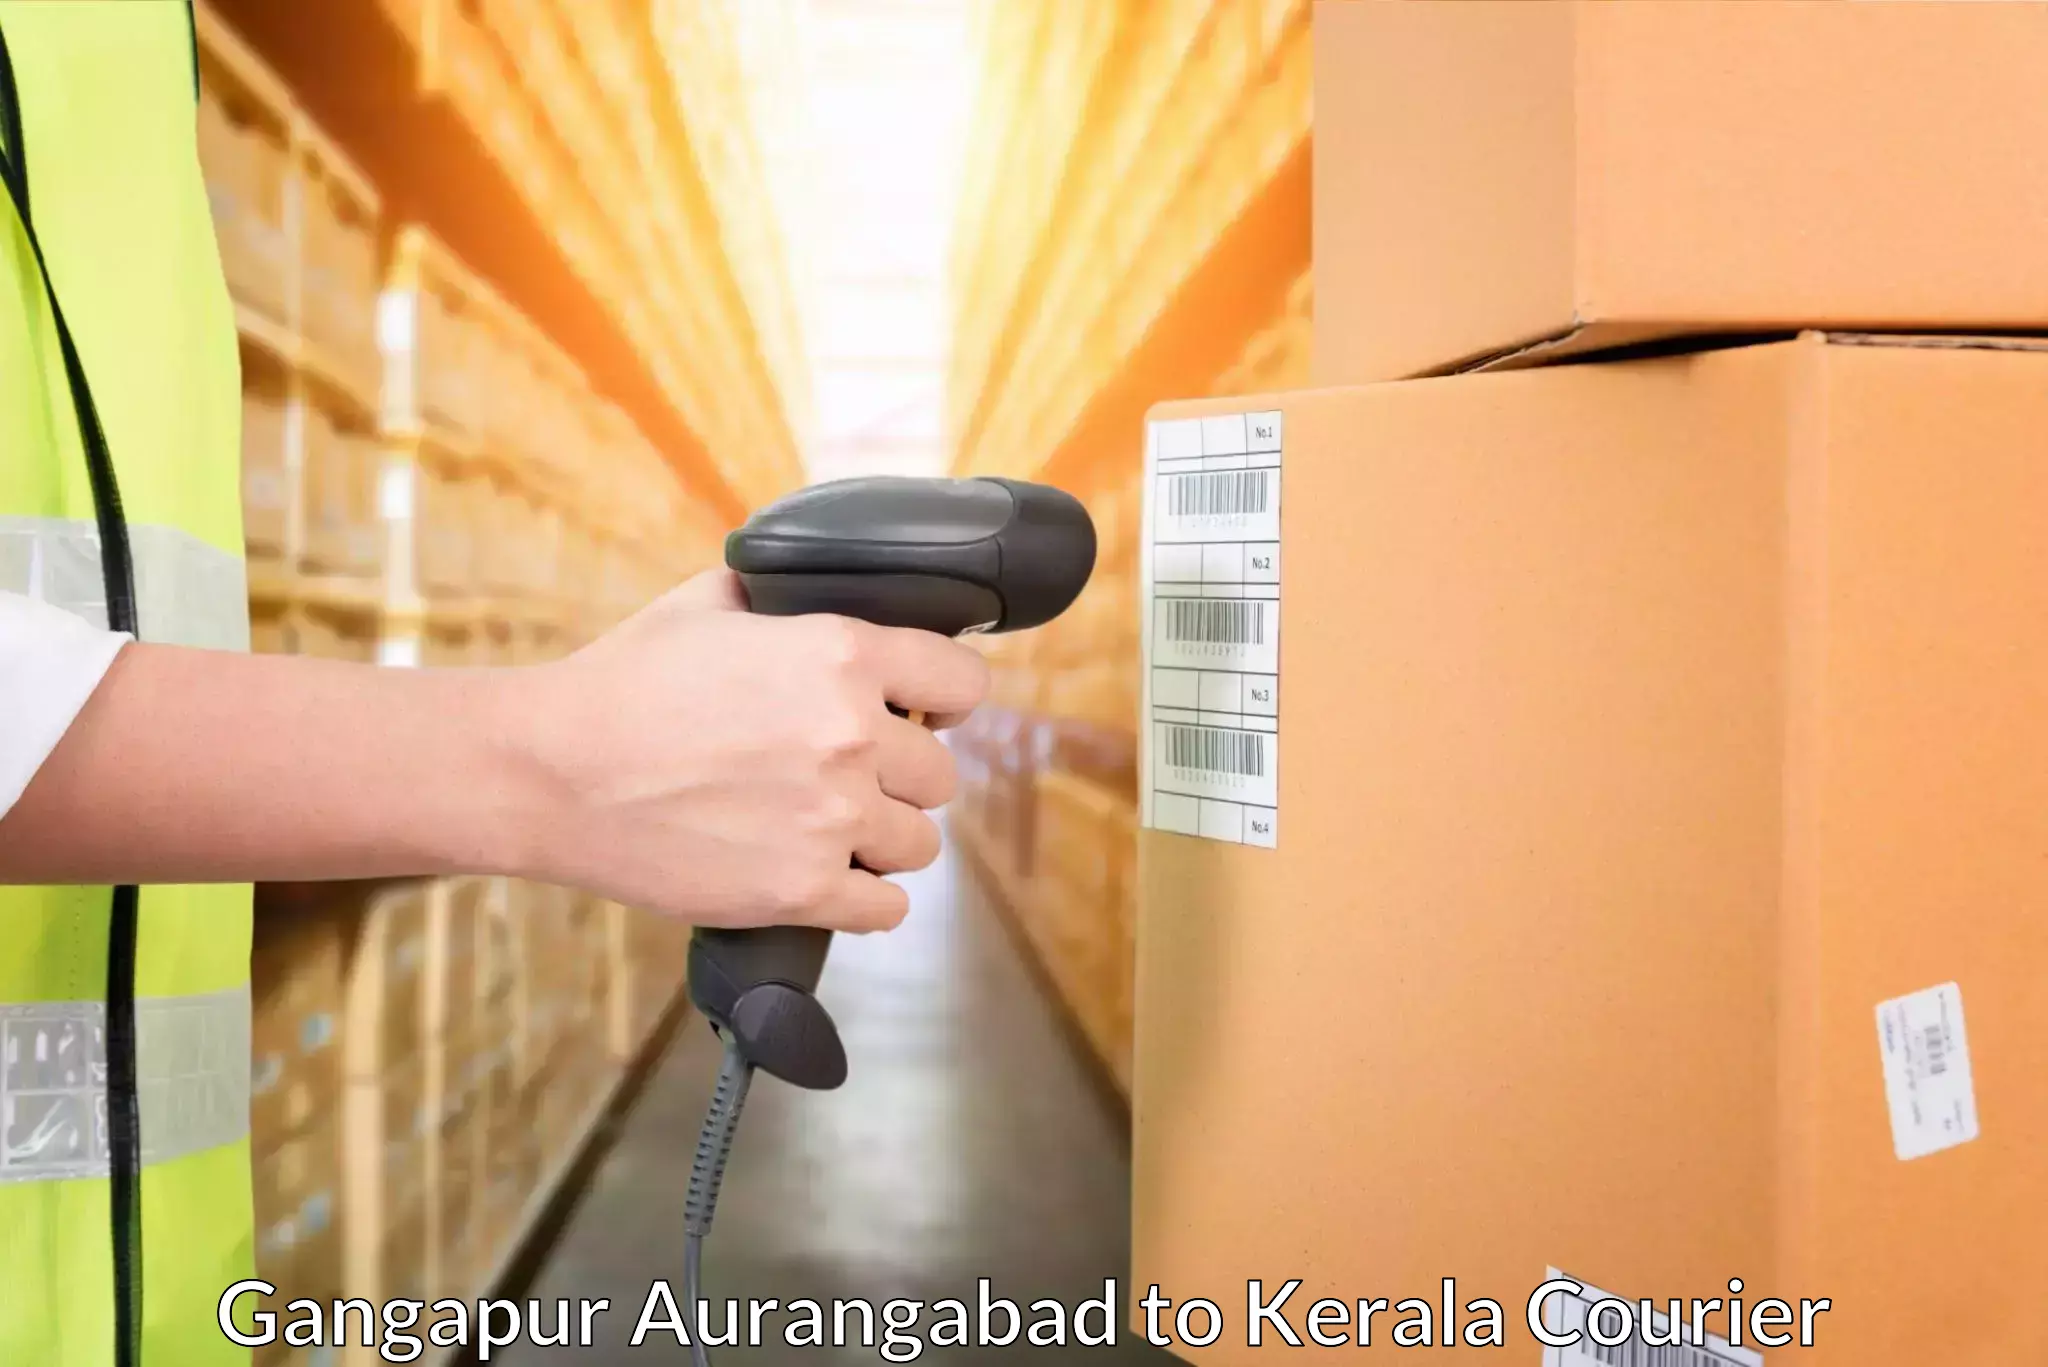 Courier service partnerships Gangapur Aurangabad to Trivandrum